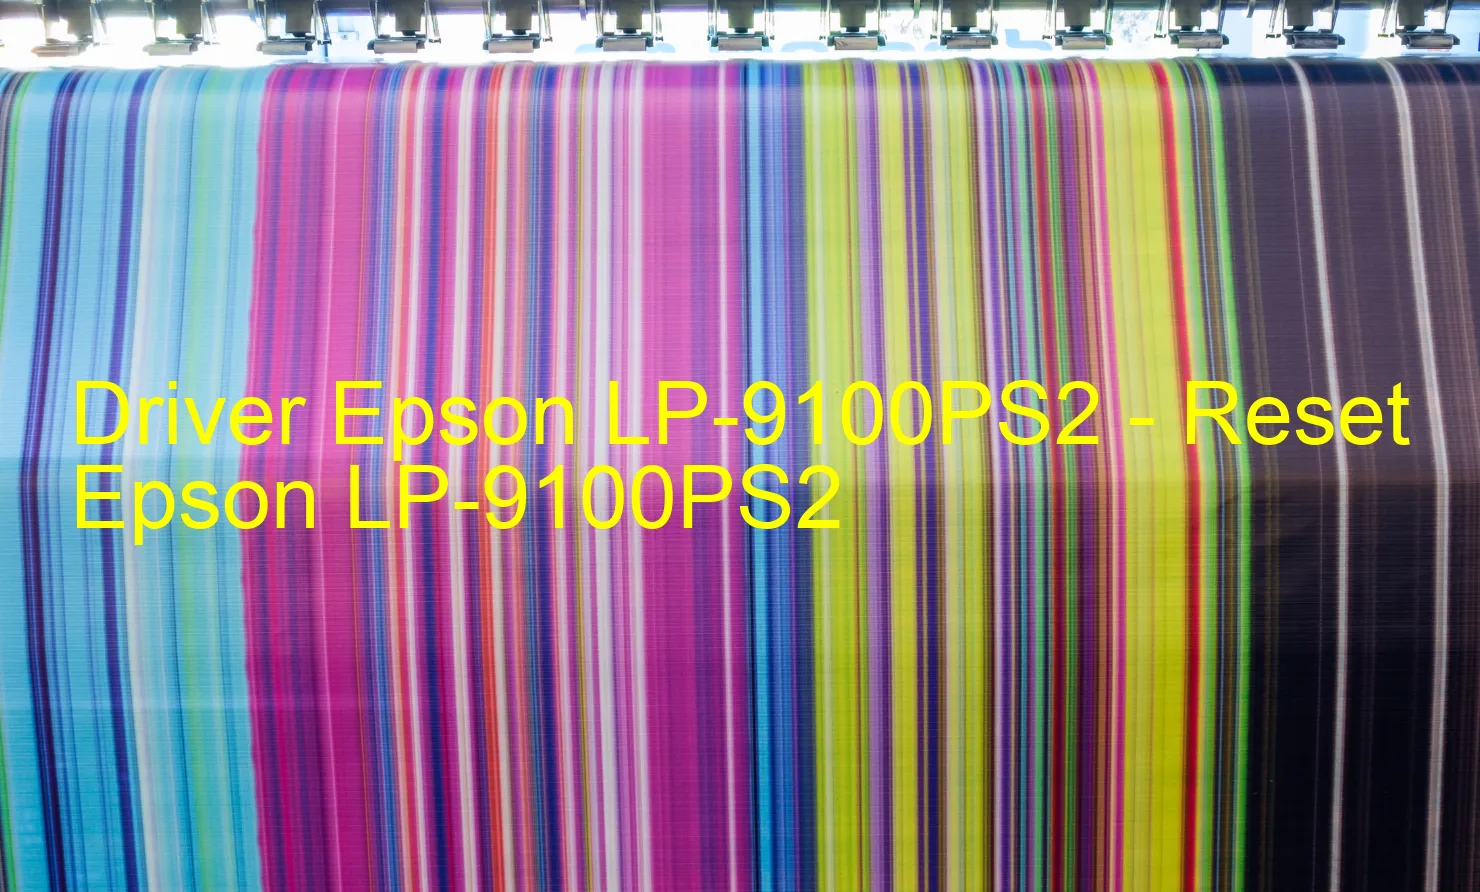 Epson LP-9100PS2のドライバー、Epson LP-9100PS2のリセットソフトウェア